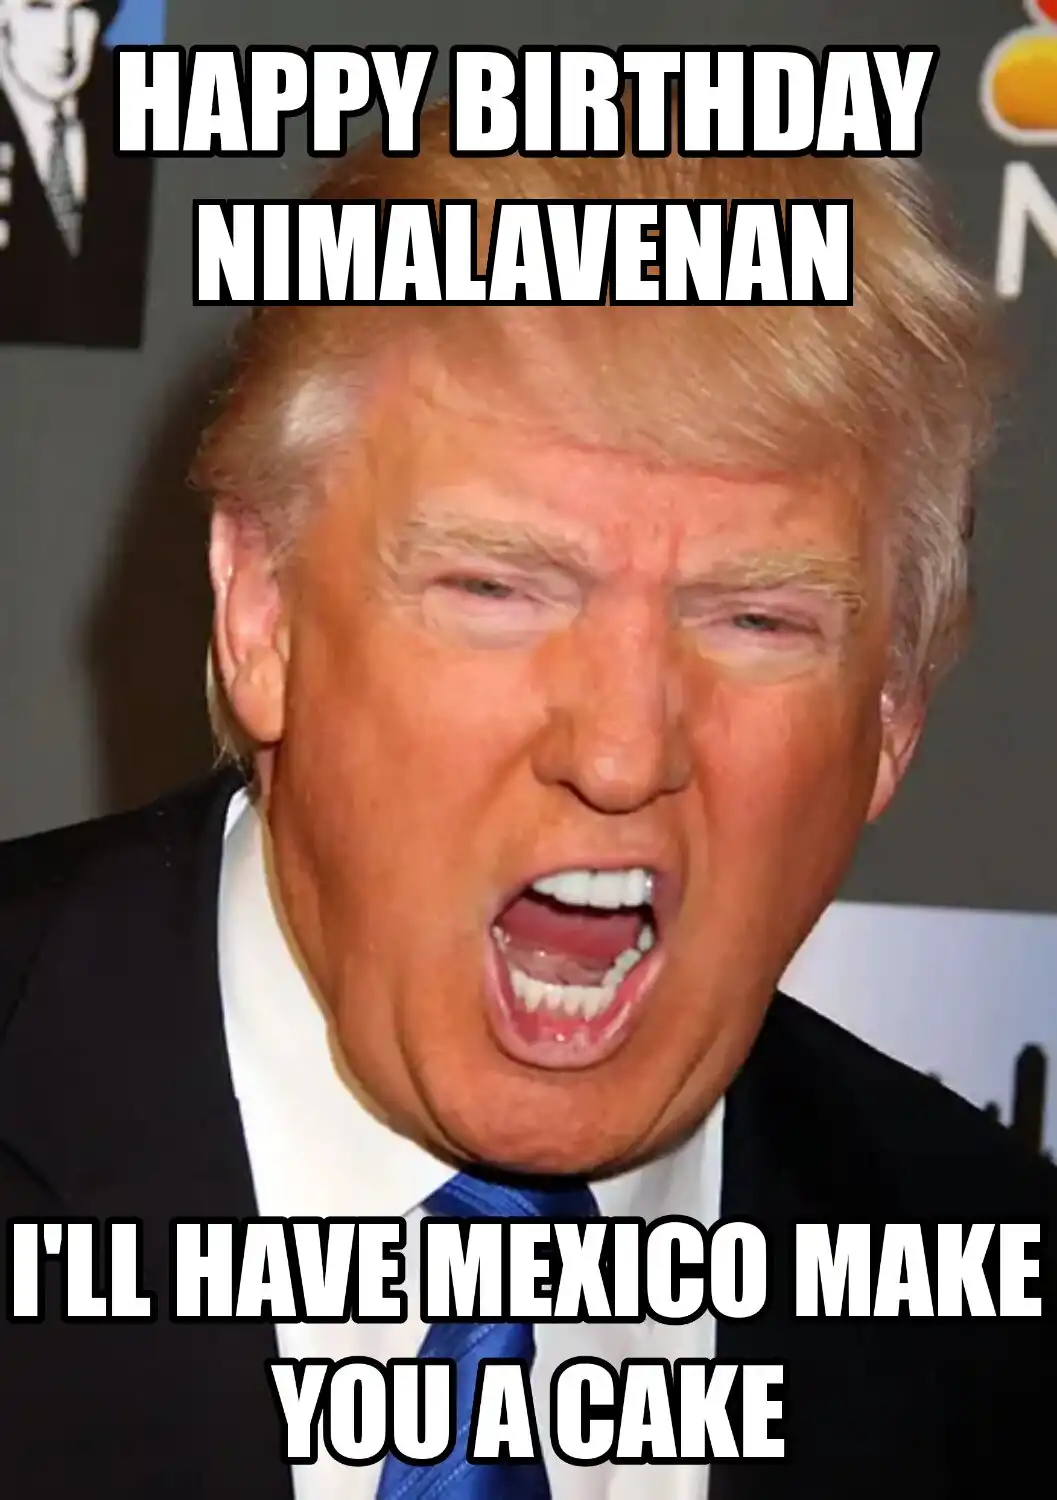 Happy Birthday Nimalavenan Mexico Make You A Cake Meme